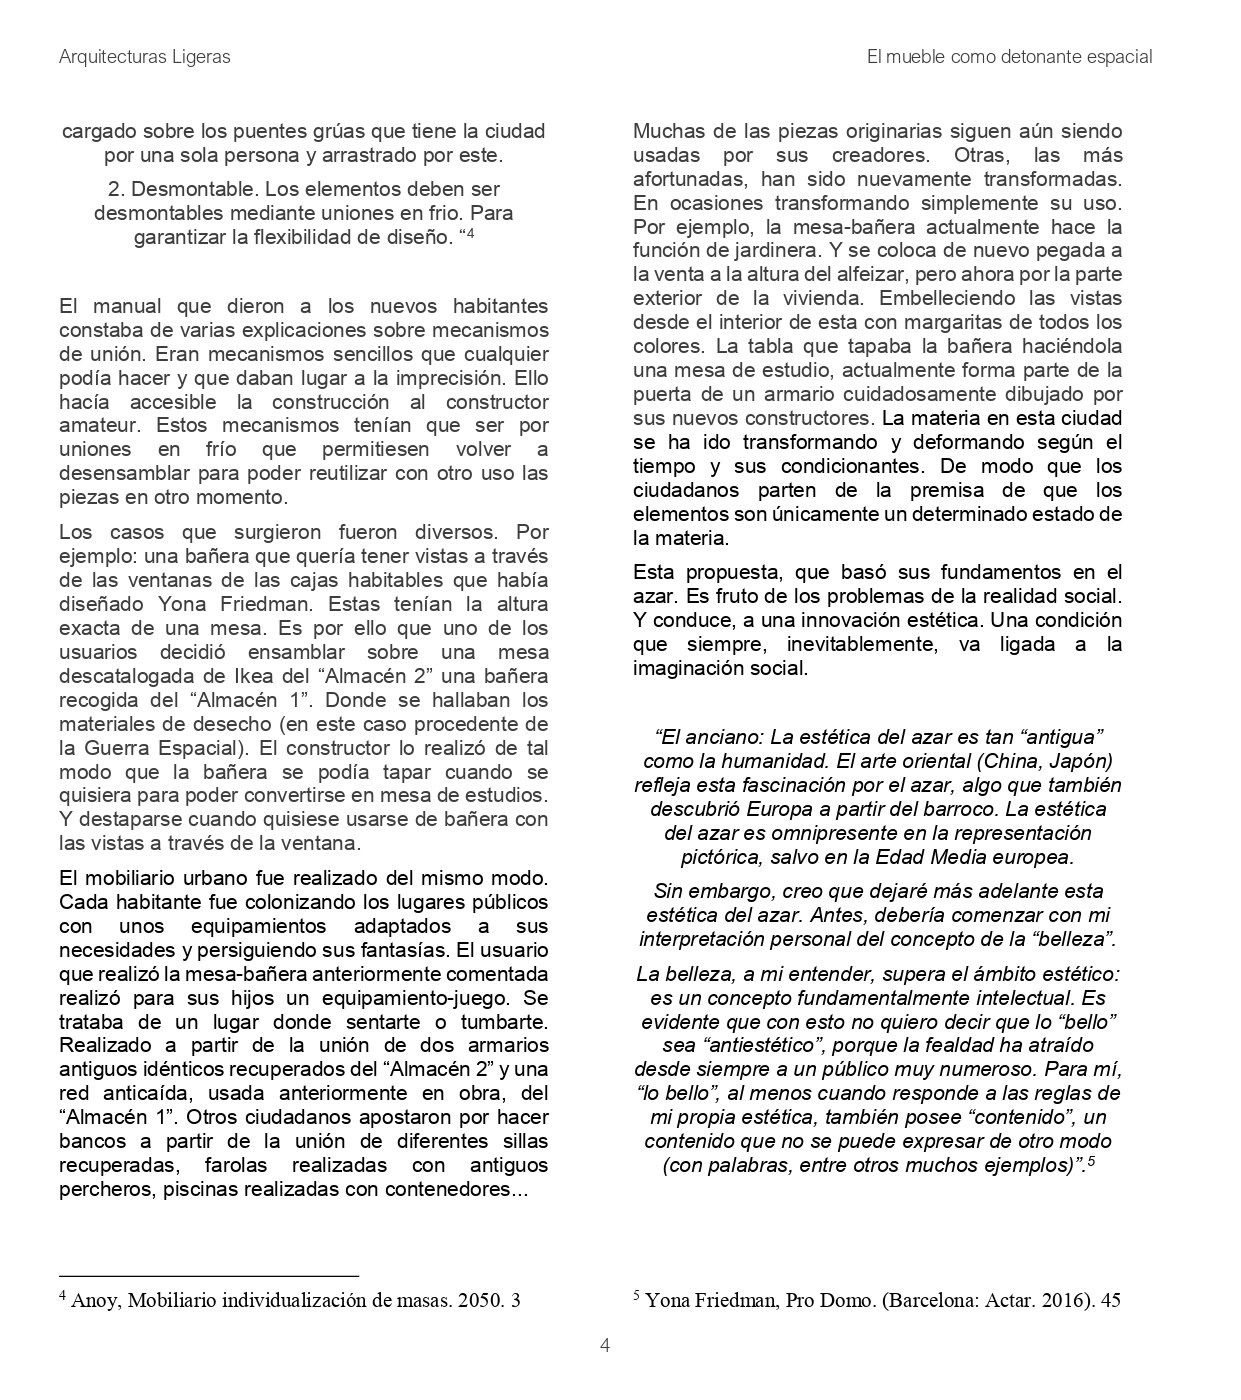 PDF -  MOBILIARIO INDIVIDUALIZACION DE MASAS - RAÚL ALMENARA._page-0005.jpg